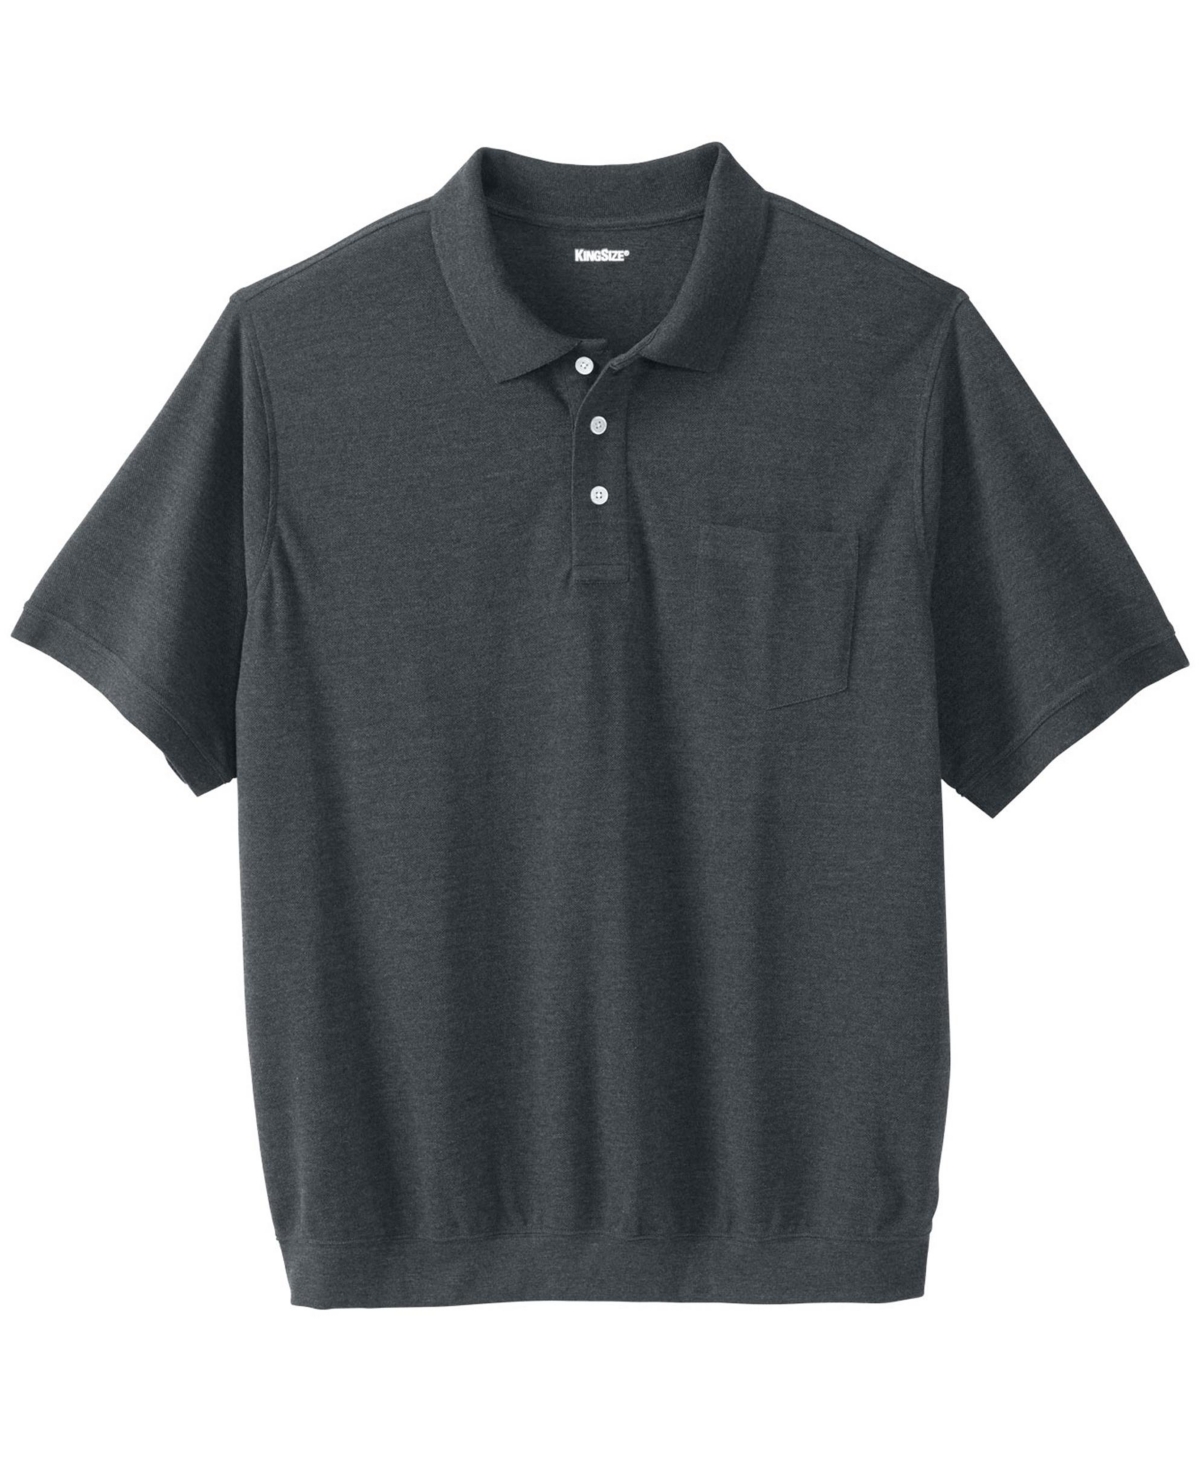 Big & Tall Banded Bottom Pocket Shrink-Less Pique Polo Shirt - Heather charcoal